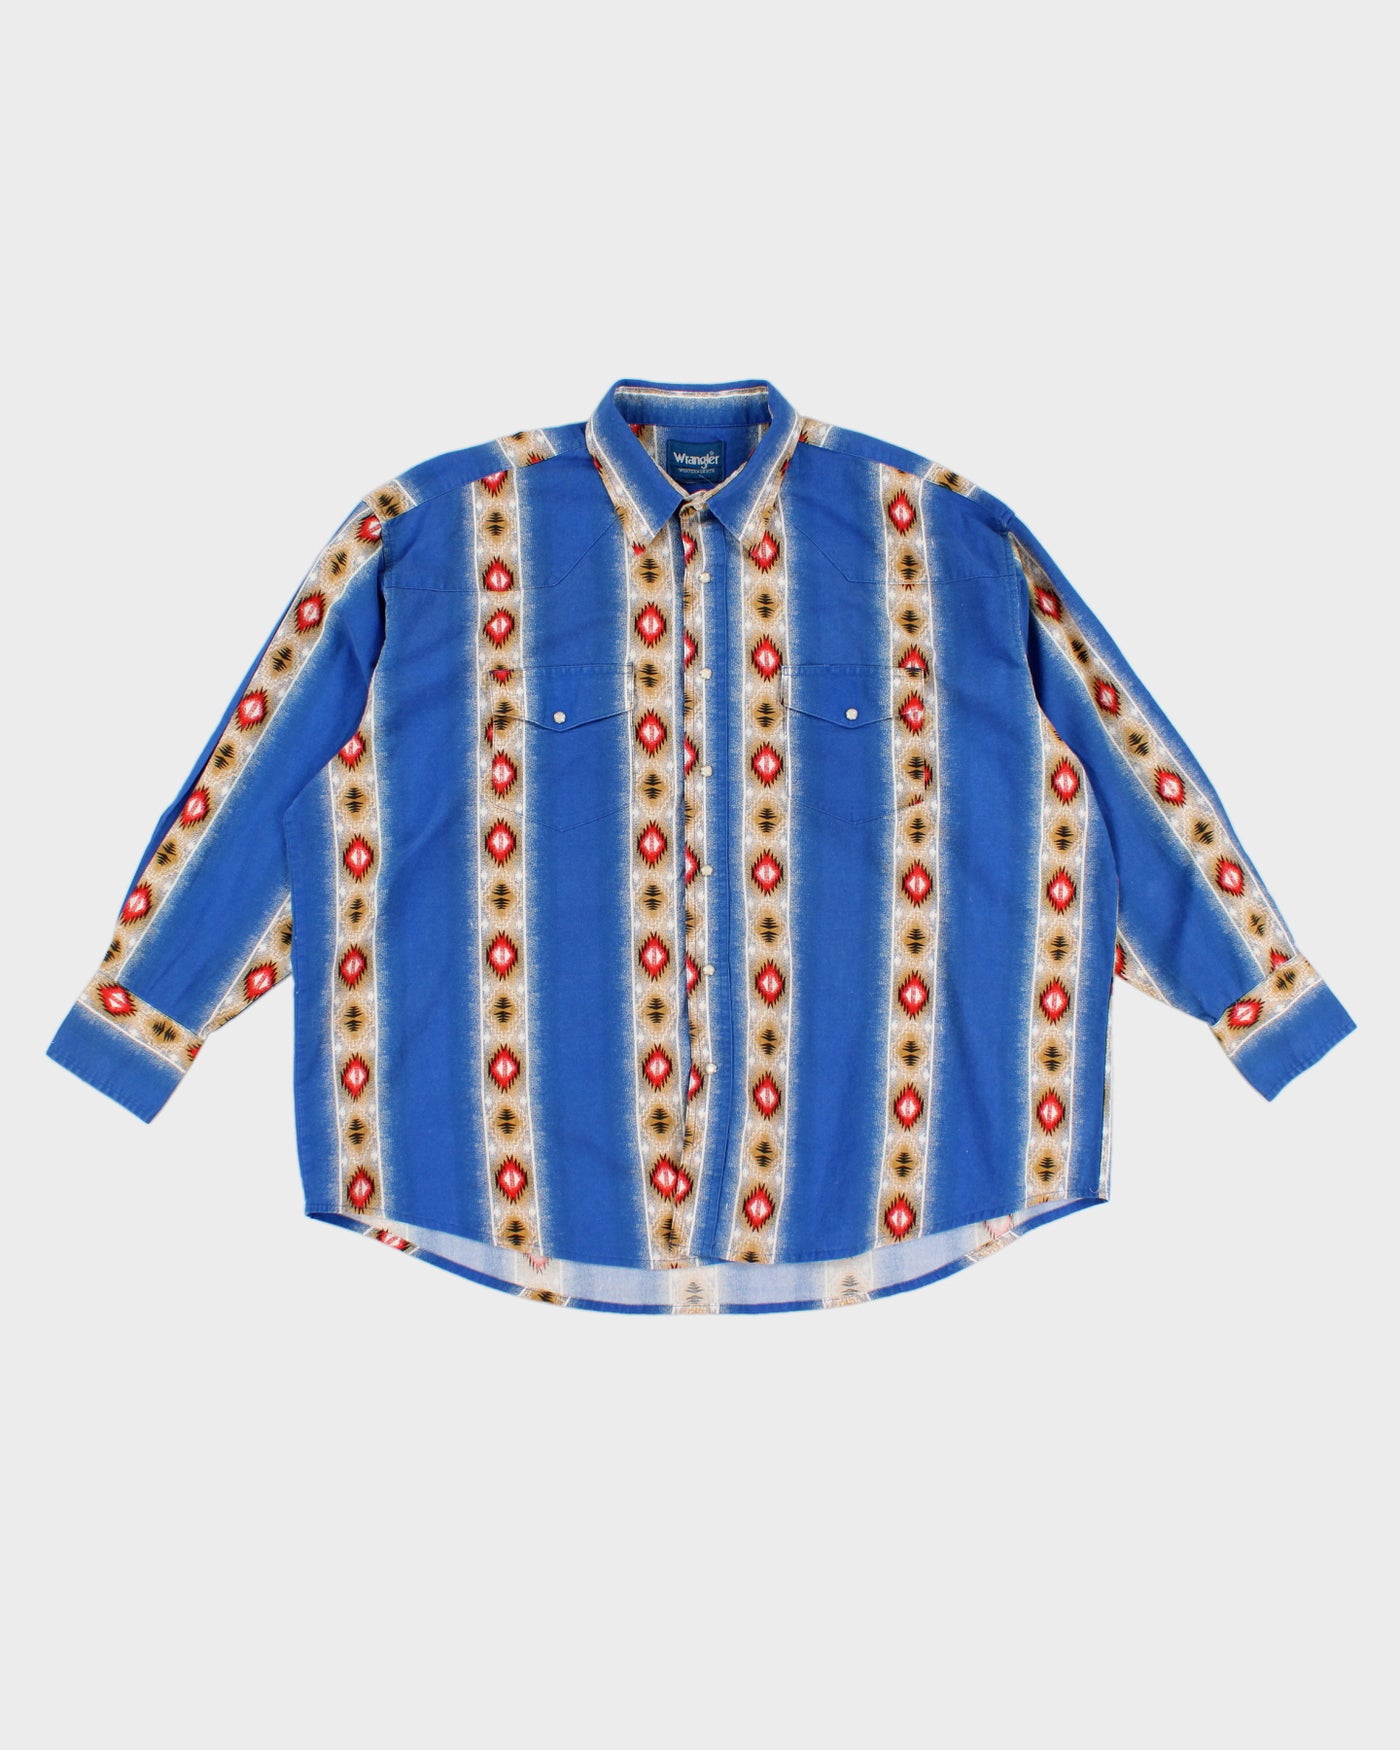 Vintage Wrangler Blue Patterned Western Style Button Up Shirt - XXL